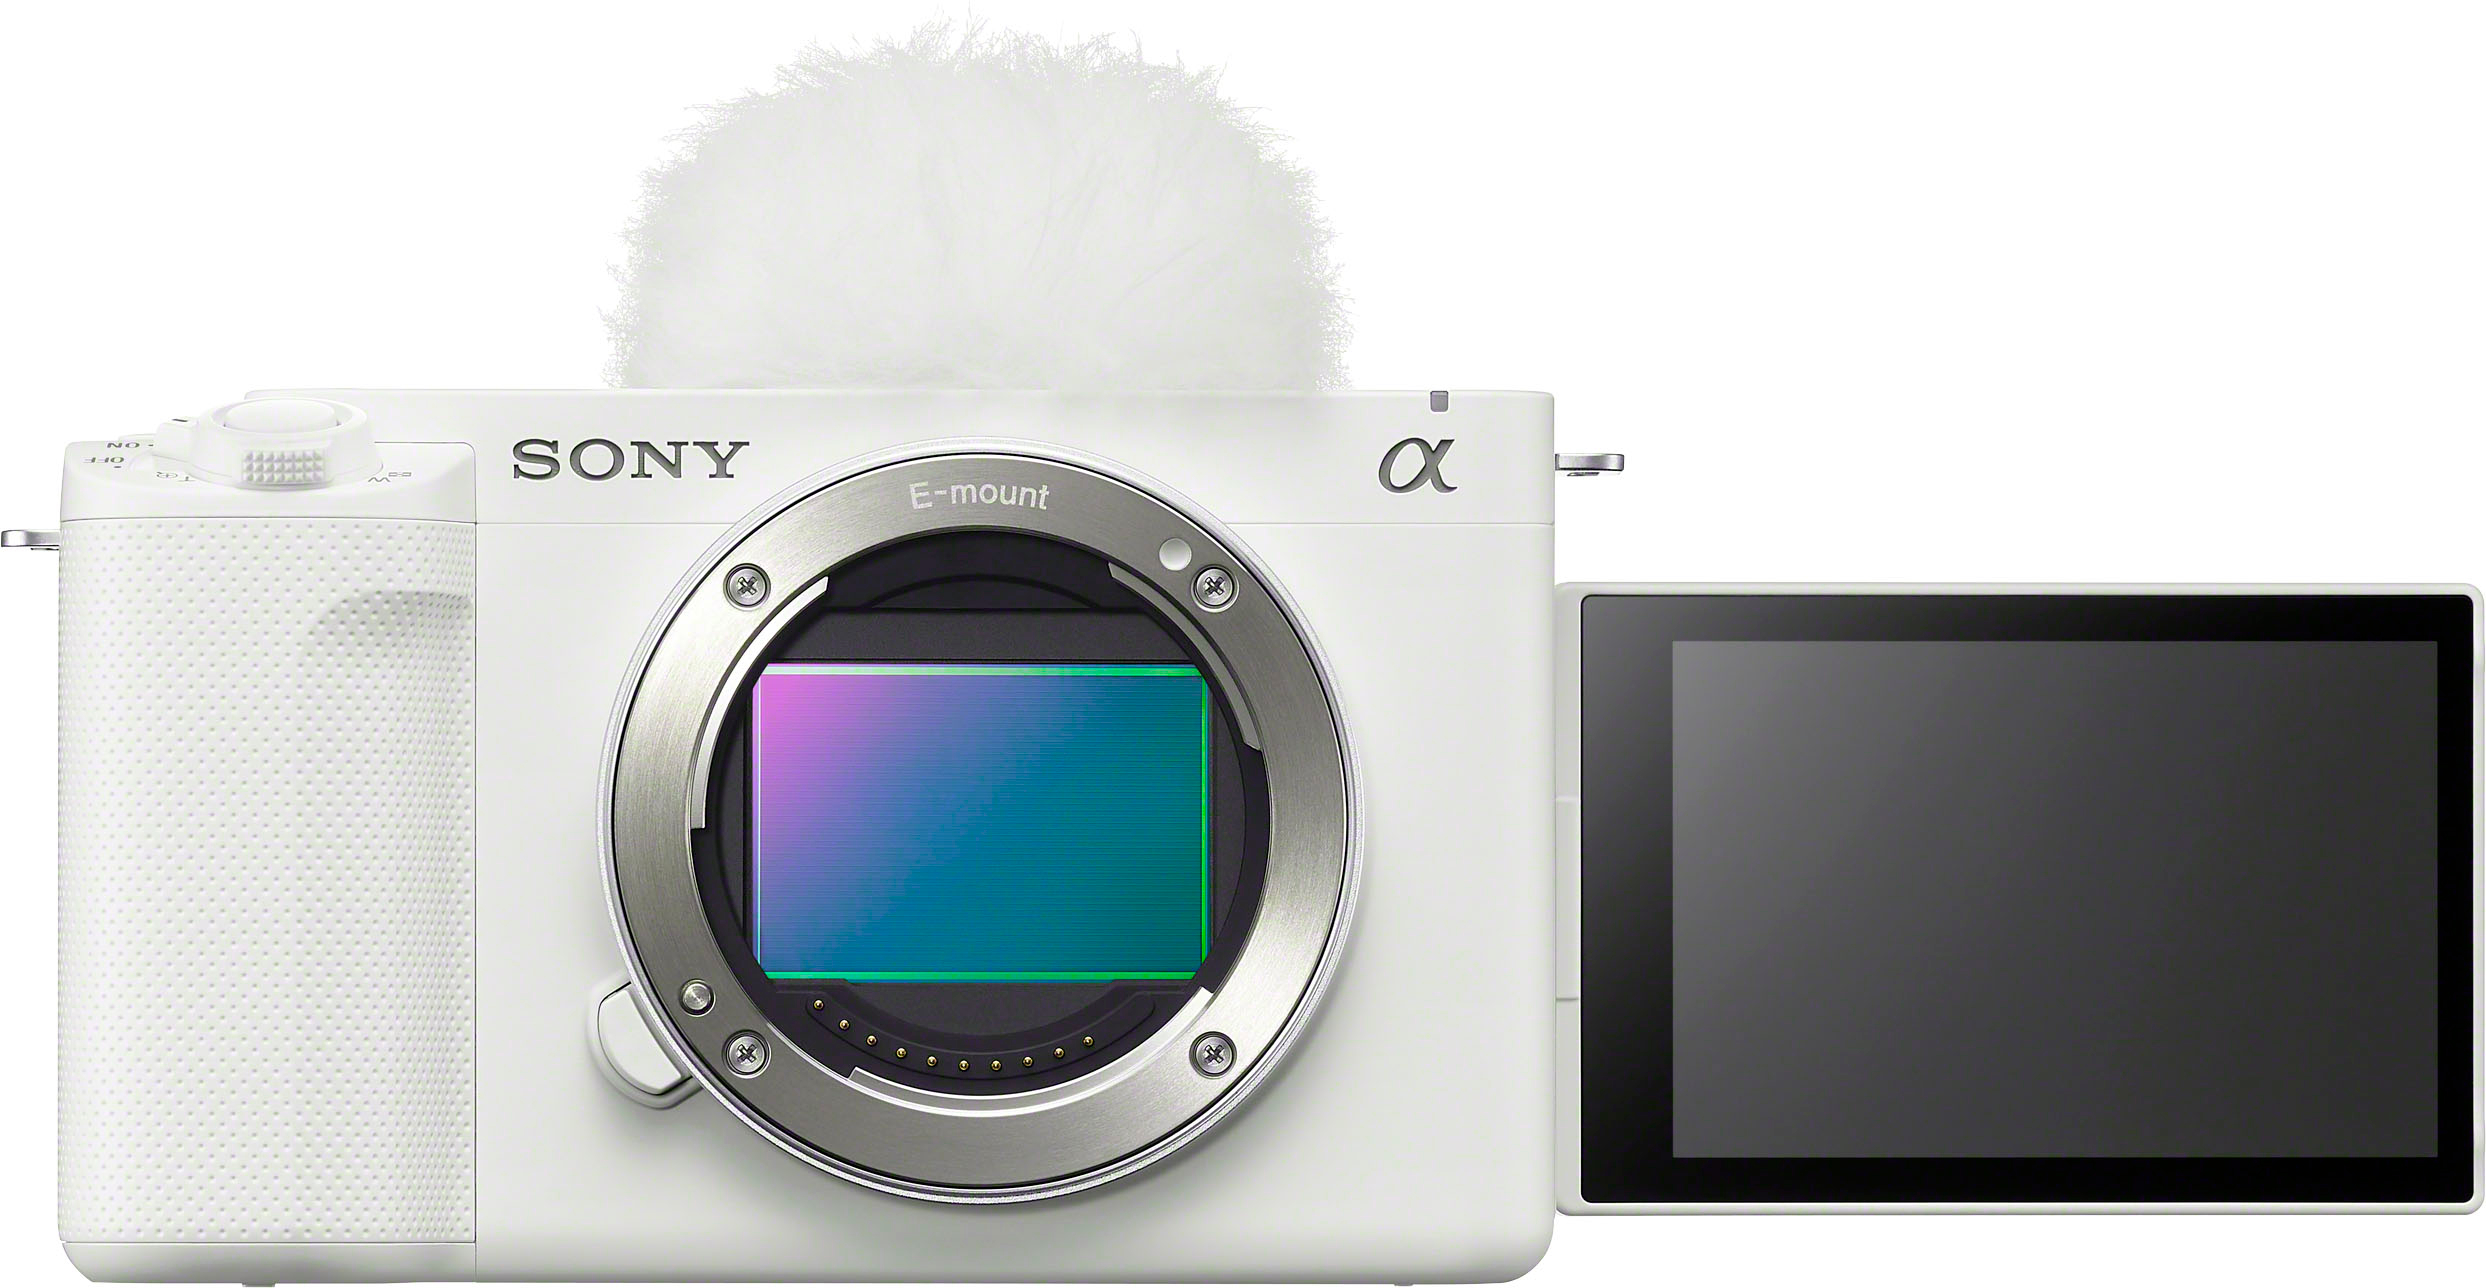 Sony ZV-1 review  Digital Camera World